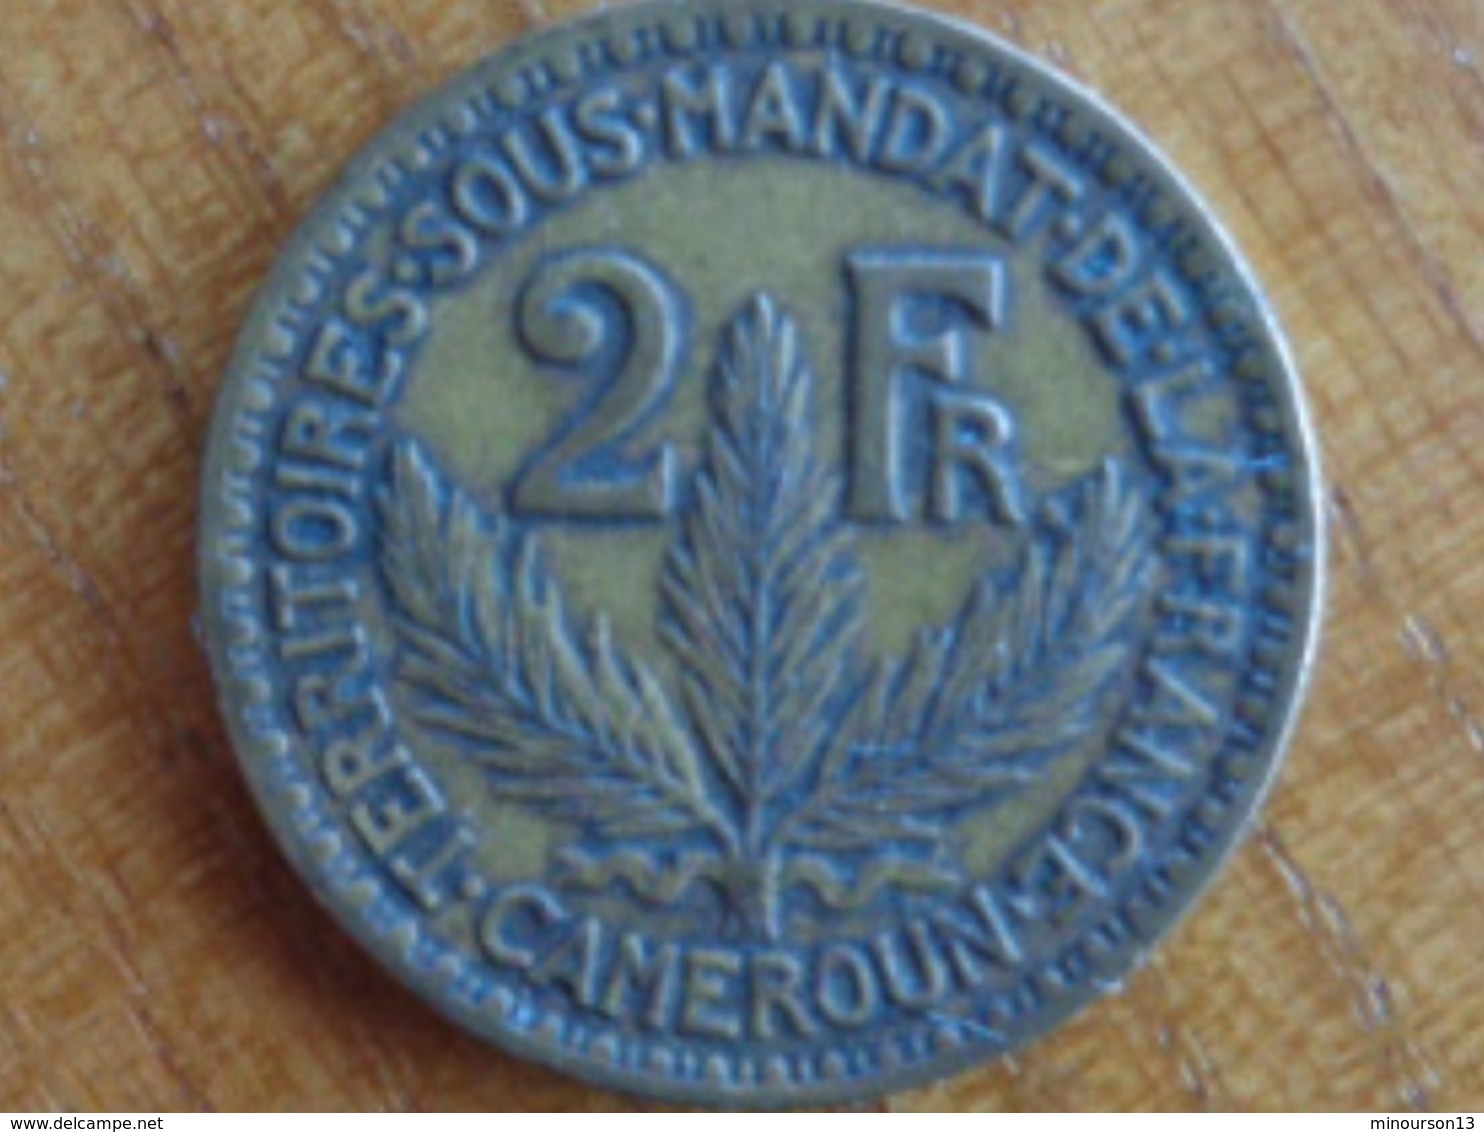 CAMEROUN SOUS MANDAT DE LA FRANCE, 2 FRANCS 1924 - Cameroun